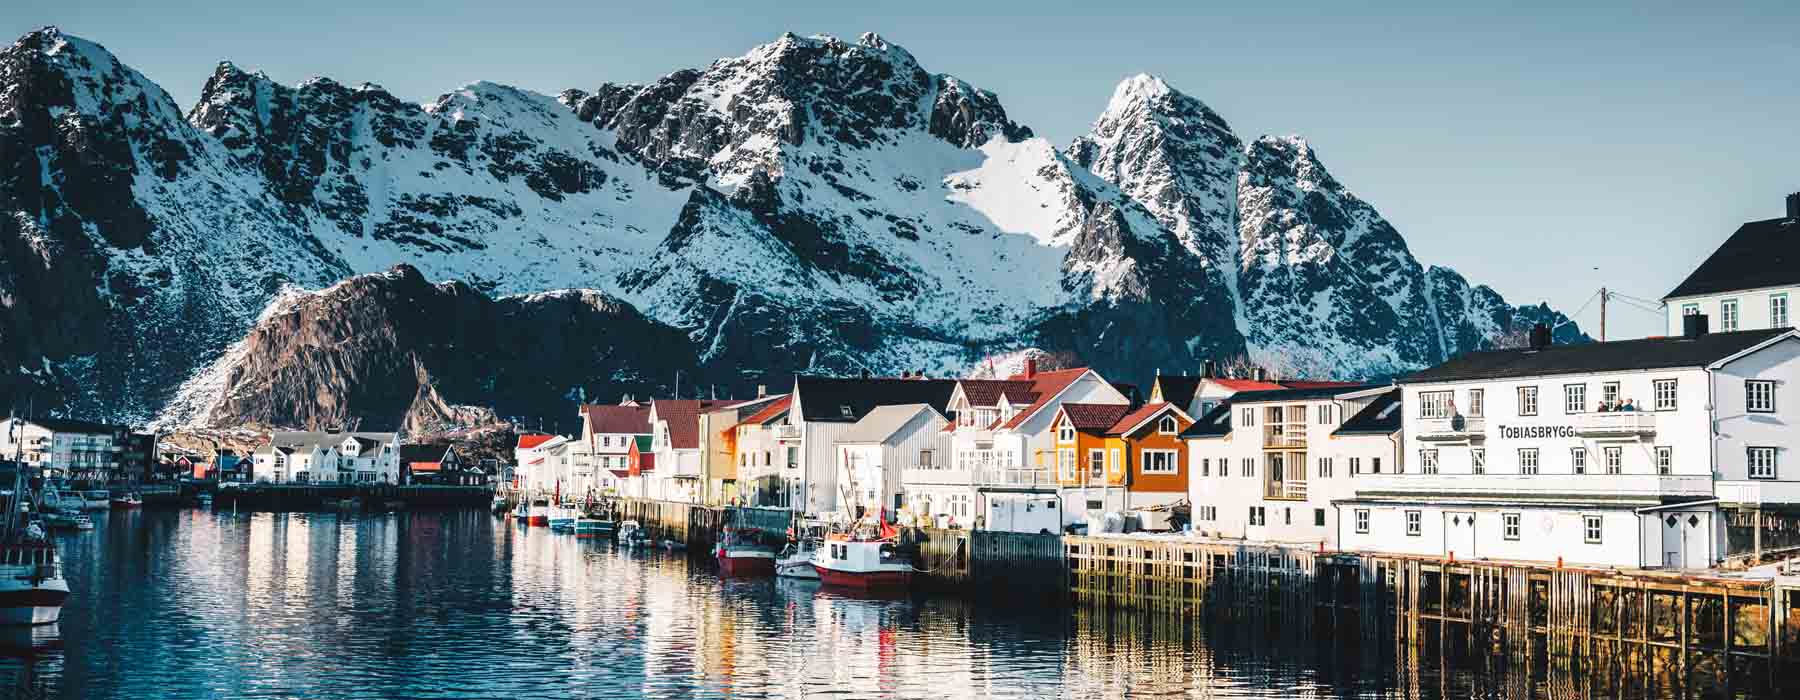 Norway<br class="hidden-md hidden-lg" /> Travel Bucket List